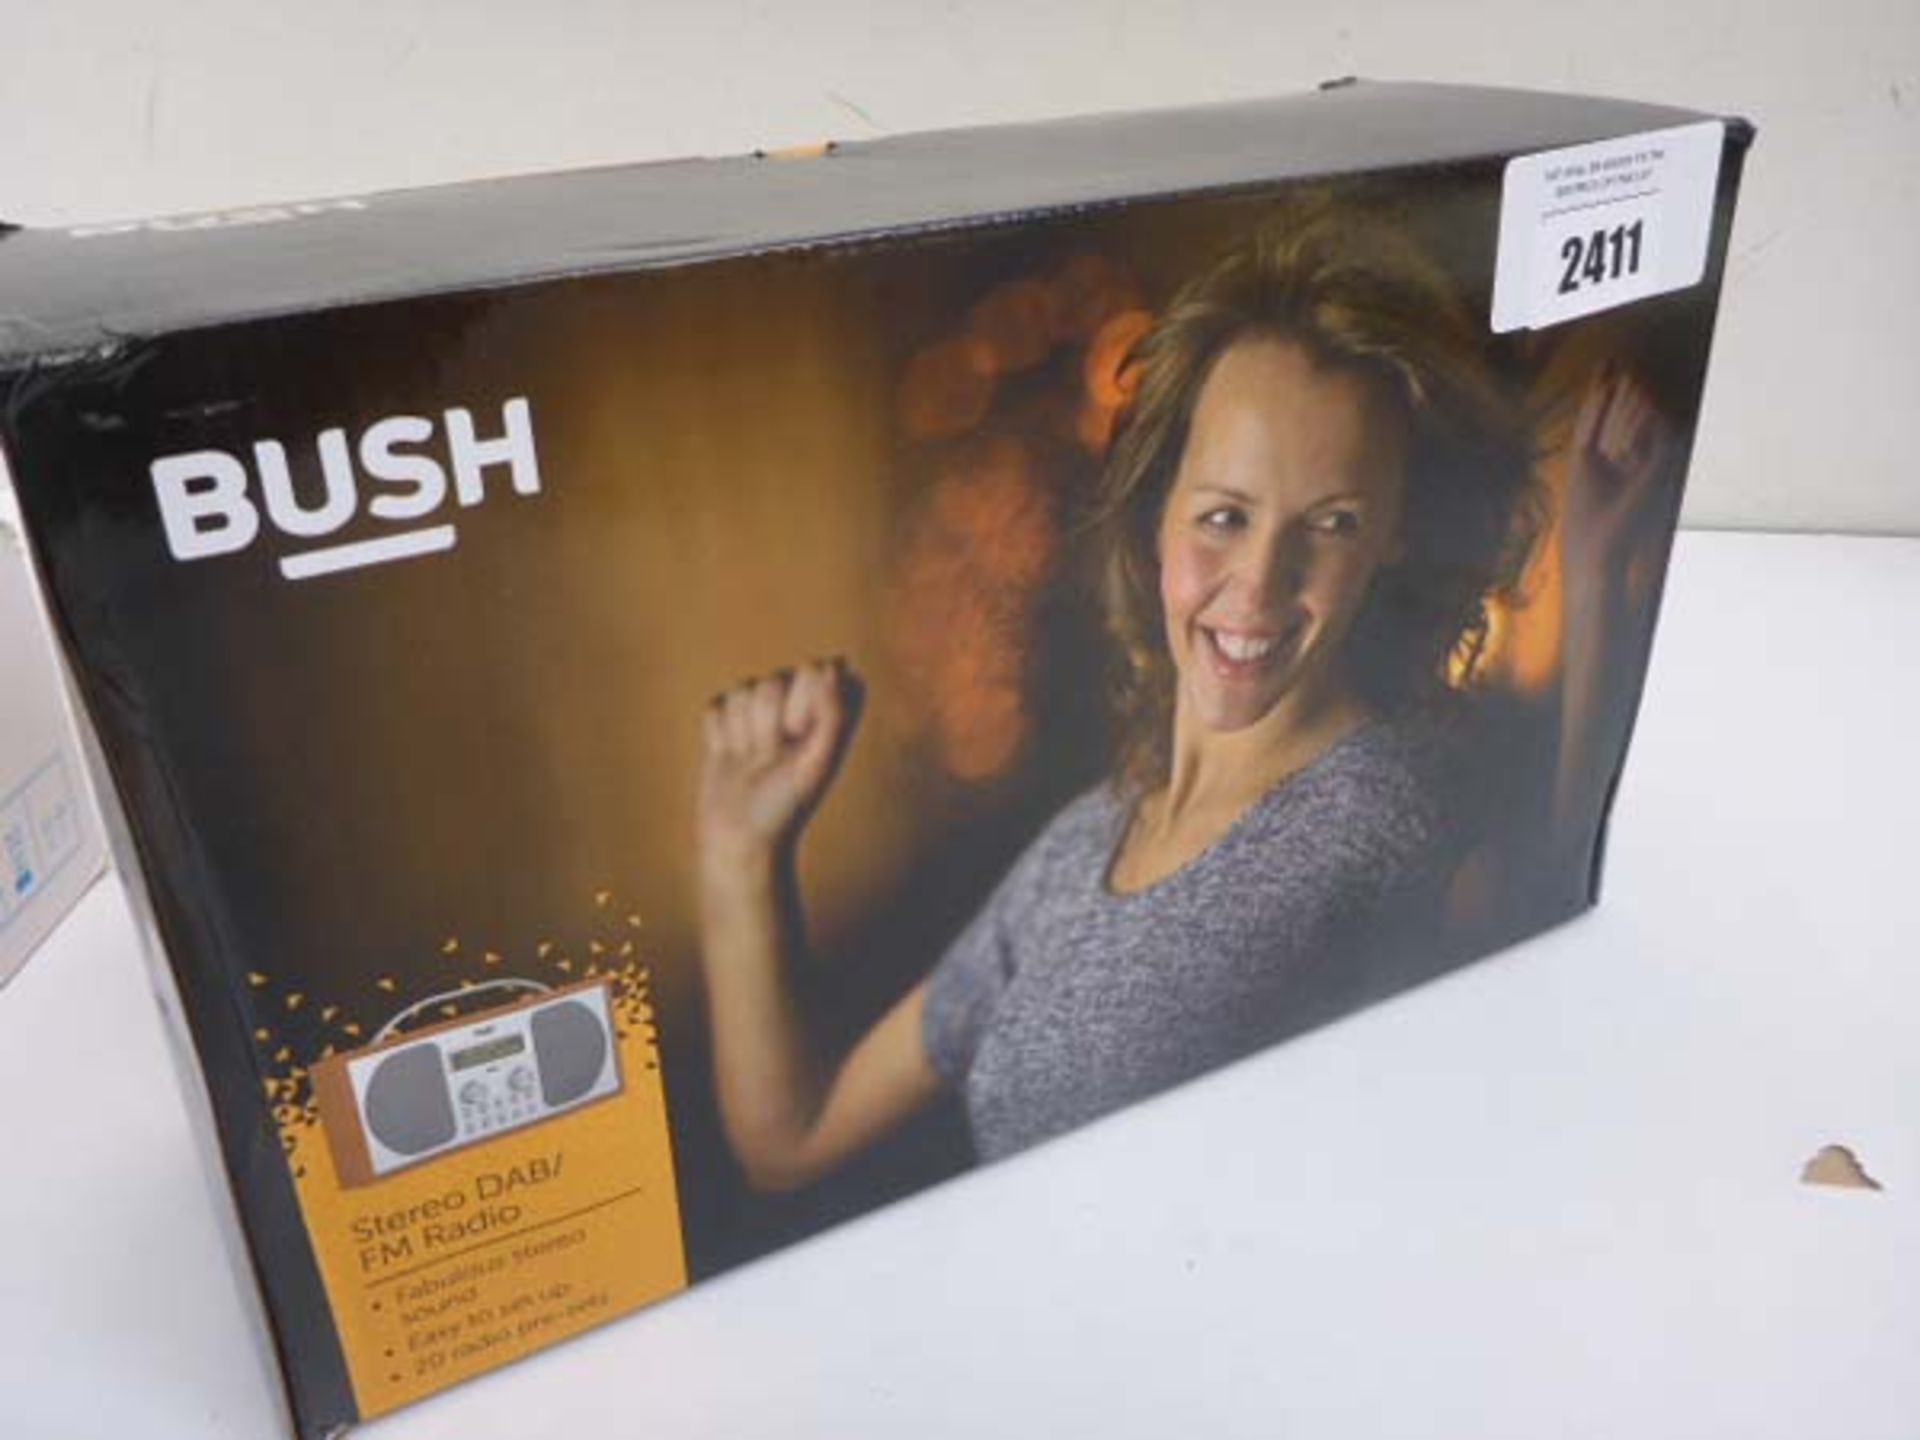 Bush Stereo Dab/FM radio in box.